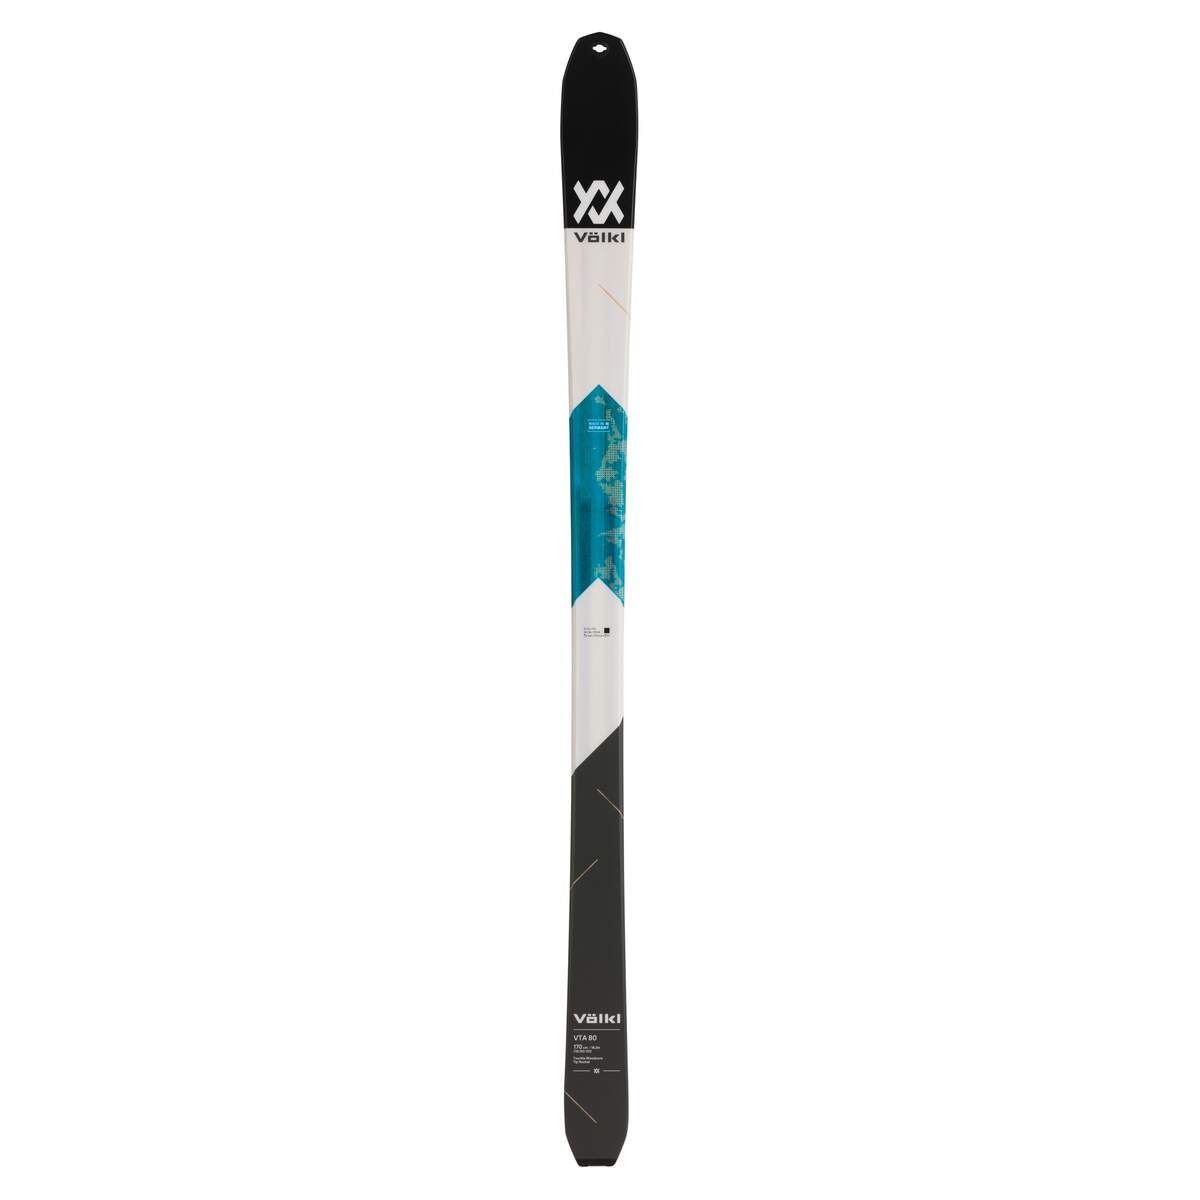 volkl-vta80-randonee-ski